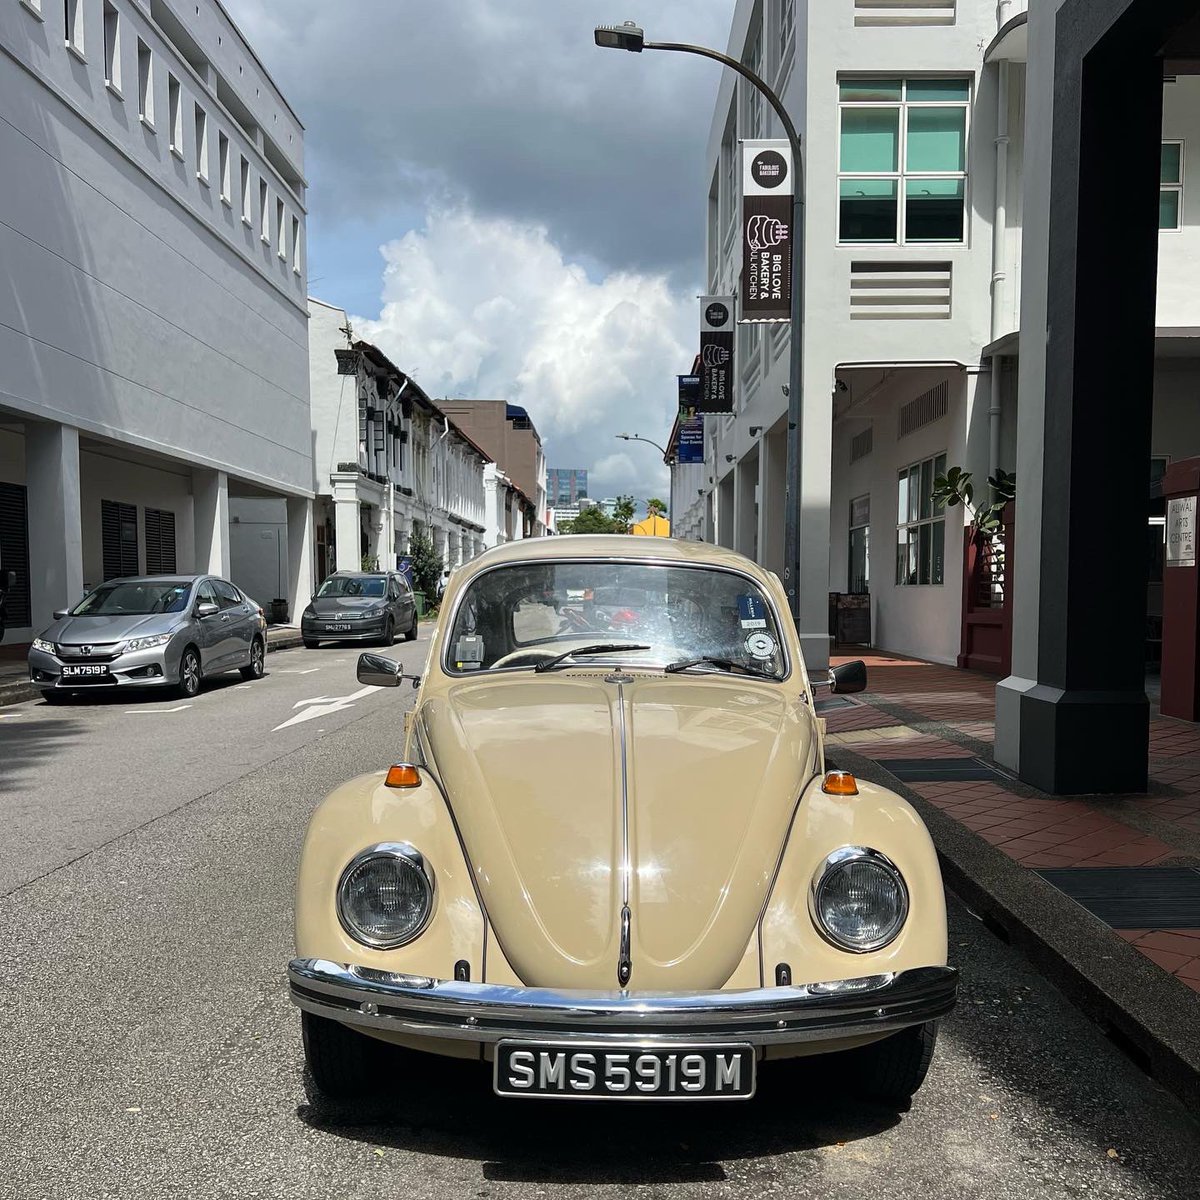 #throwback 🇸🇬
𝗩𝗢𝗟𝗞𝗦𝗪𝗔𝗚𝗘𝗡 '𝗕𝗘𝗘𝗧𝗟𝗘' 𝟭𝟯𝟬𝟬 𝗟
.
.
#visitsingapore #singapore🇸🇬 #Volkswagen #Beetle1300L #traveler #travelgram #travelphotography #travelvlogger #singapore #visitsingapore #asiatravel #amazingasia #wanderlust #welltravelled #beautifuldestinations